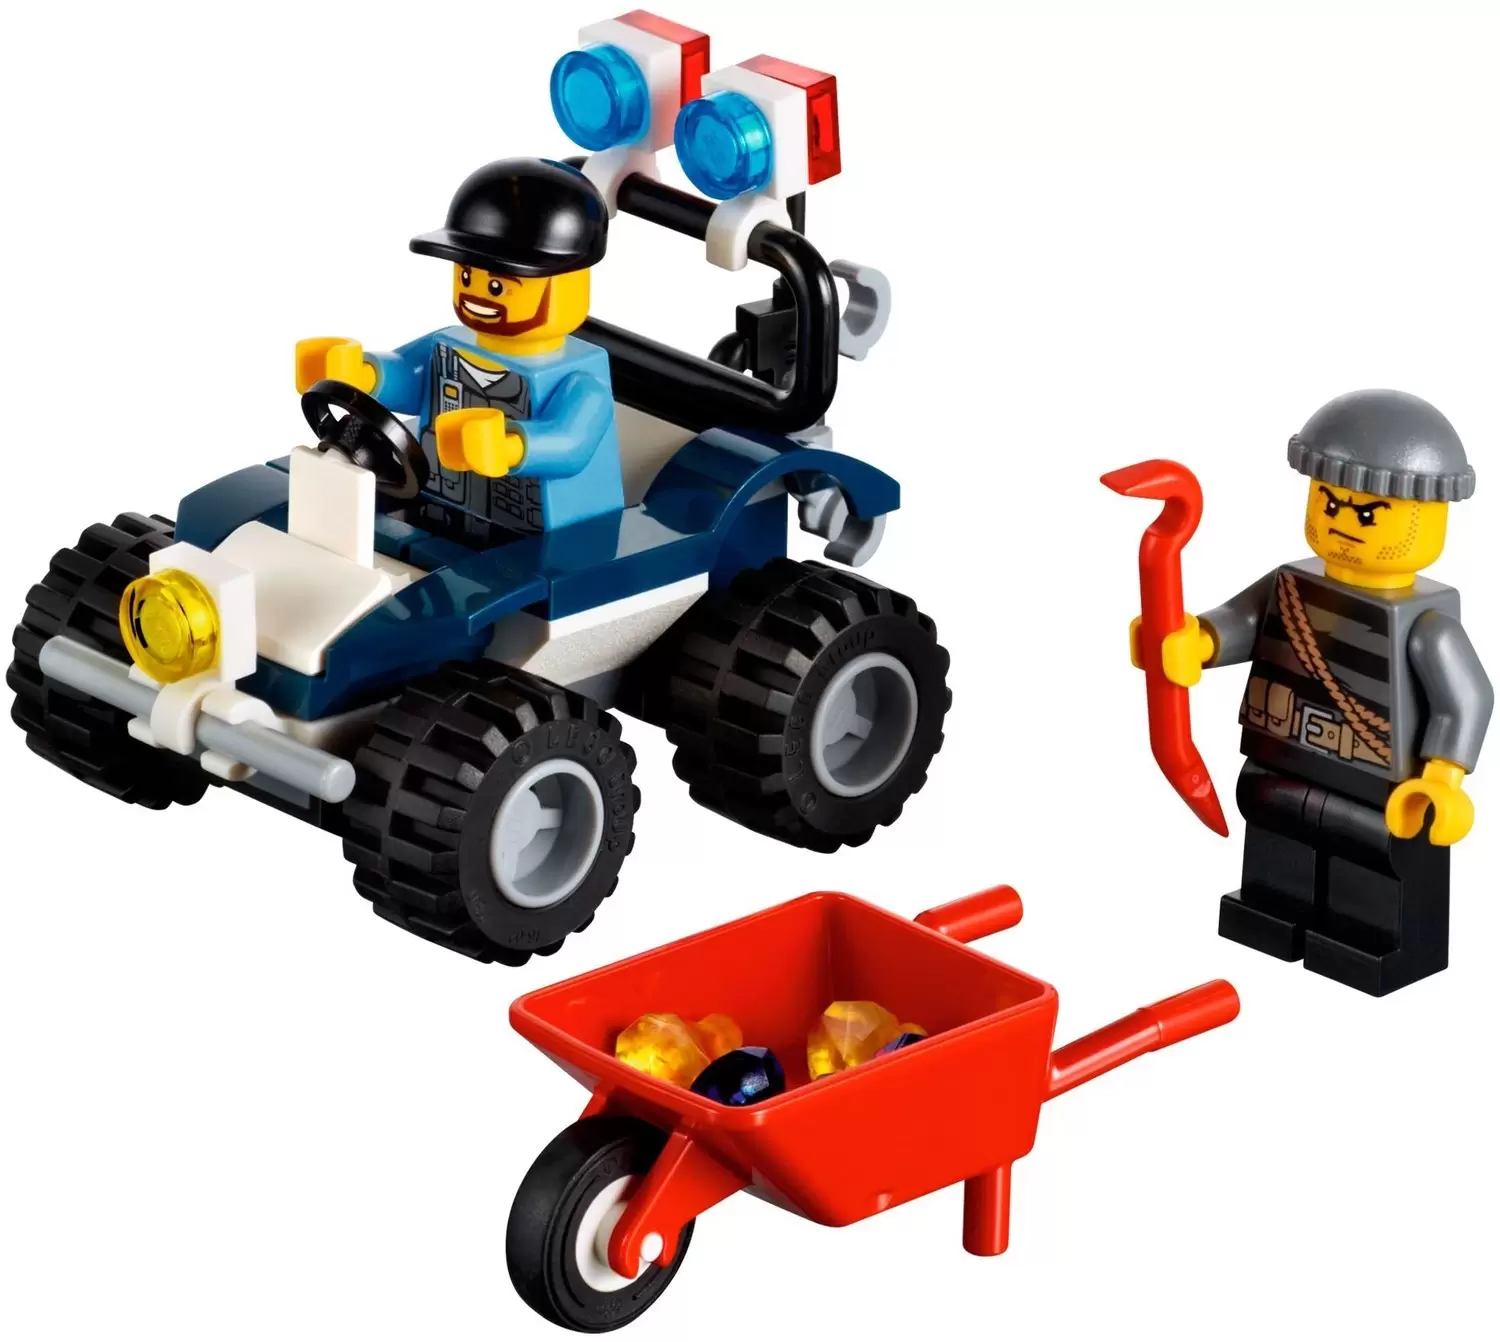 LEGO CITY - Police ATV